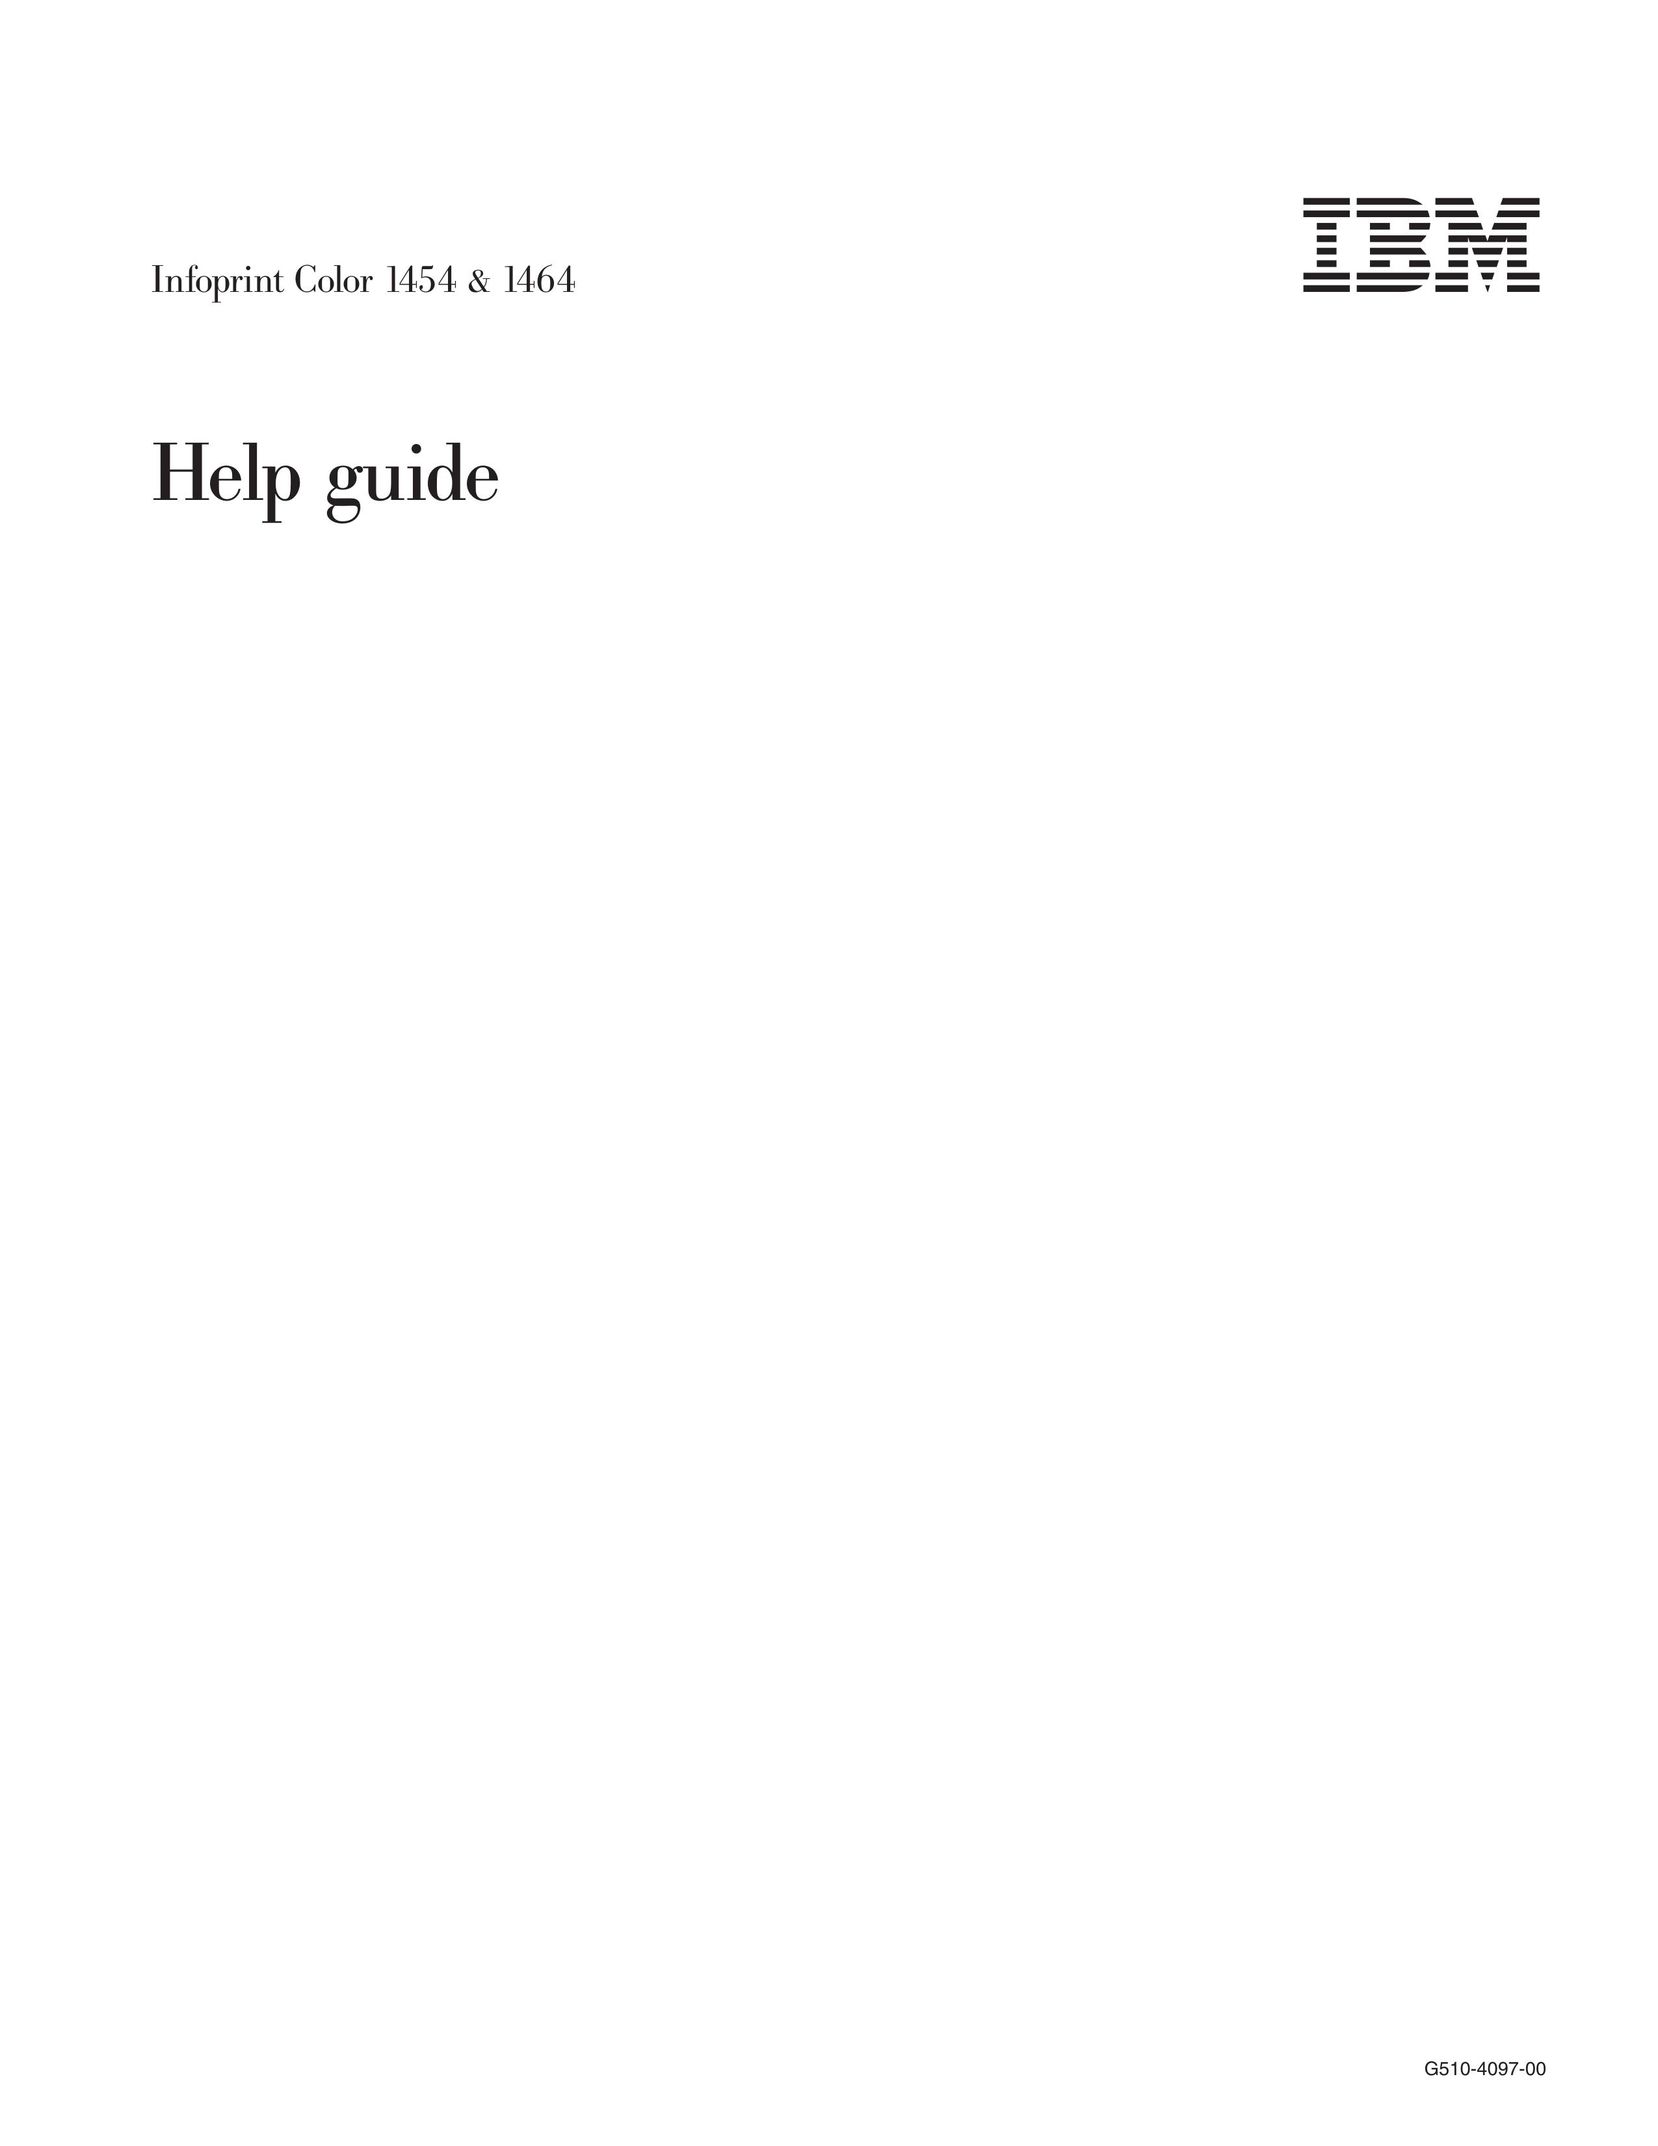 IBM 1454 Printer User Manual